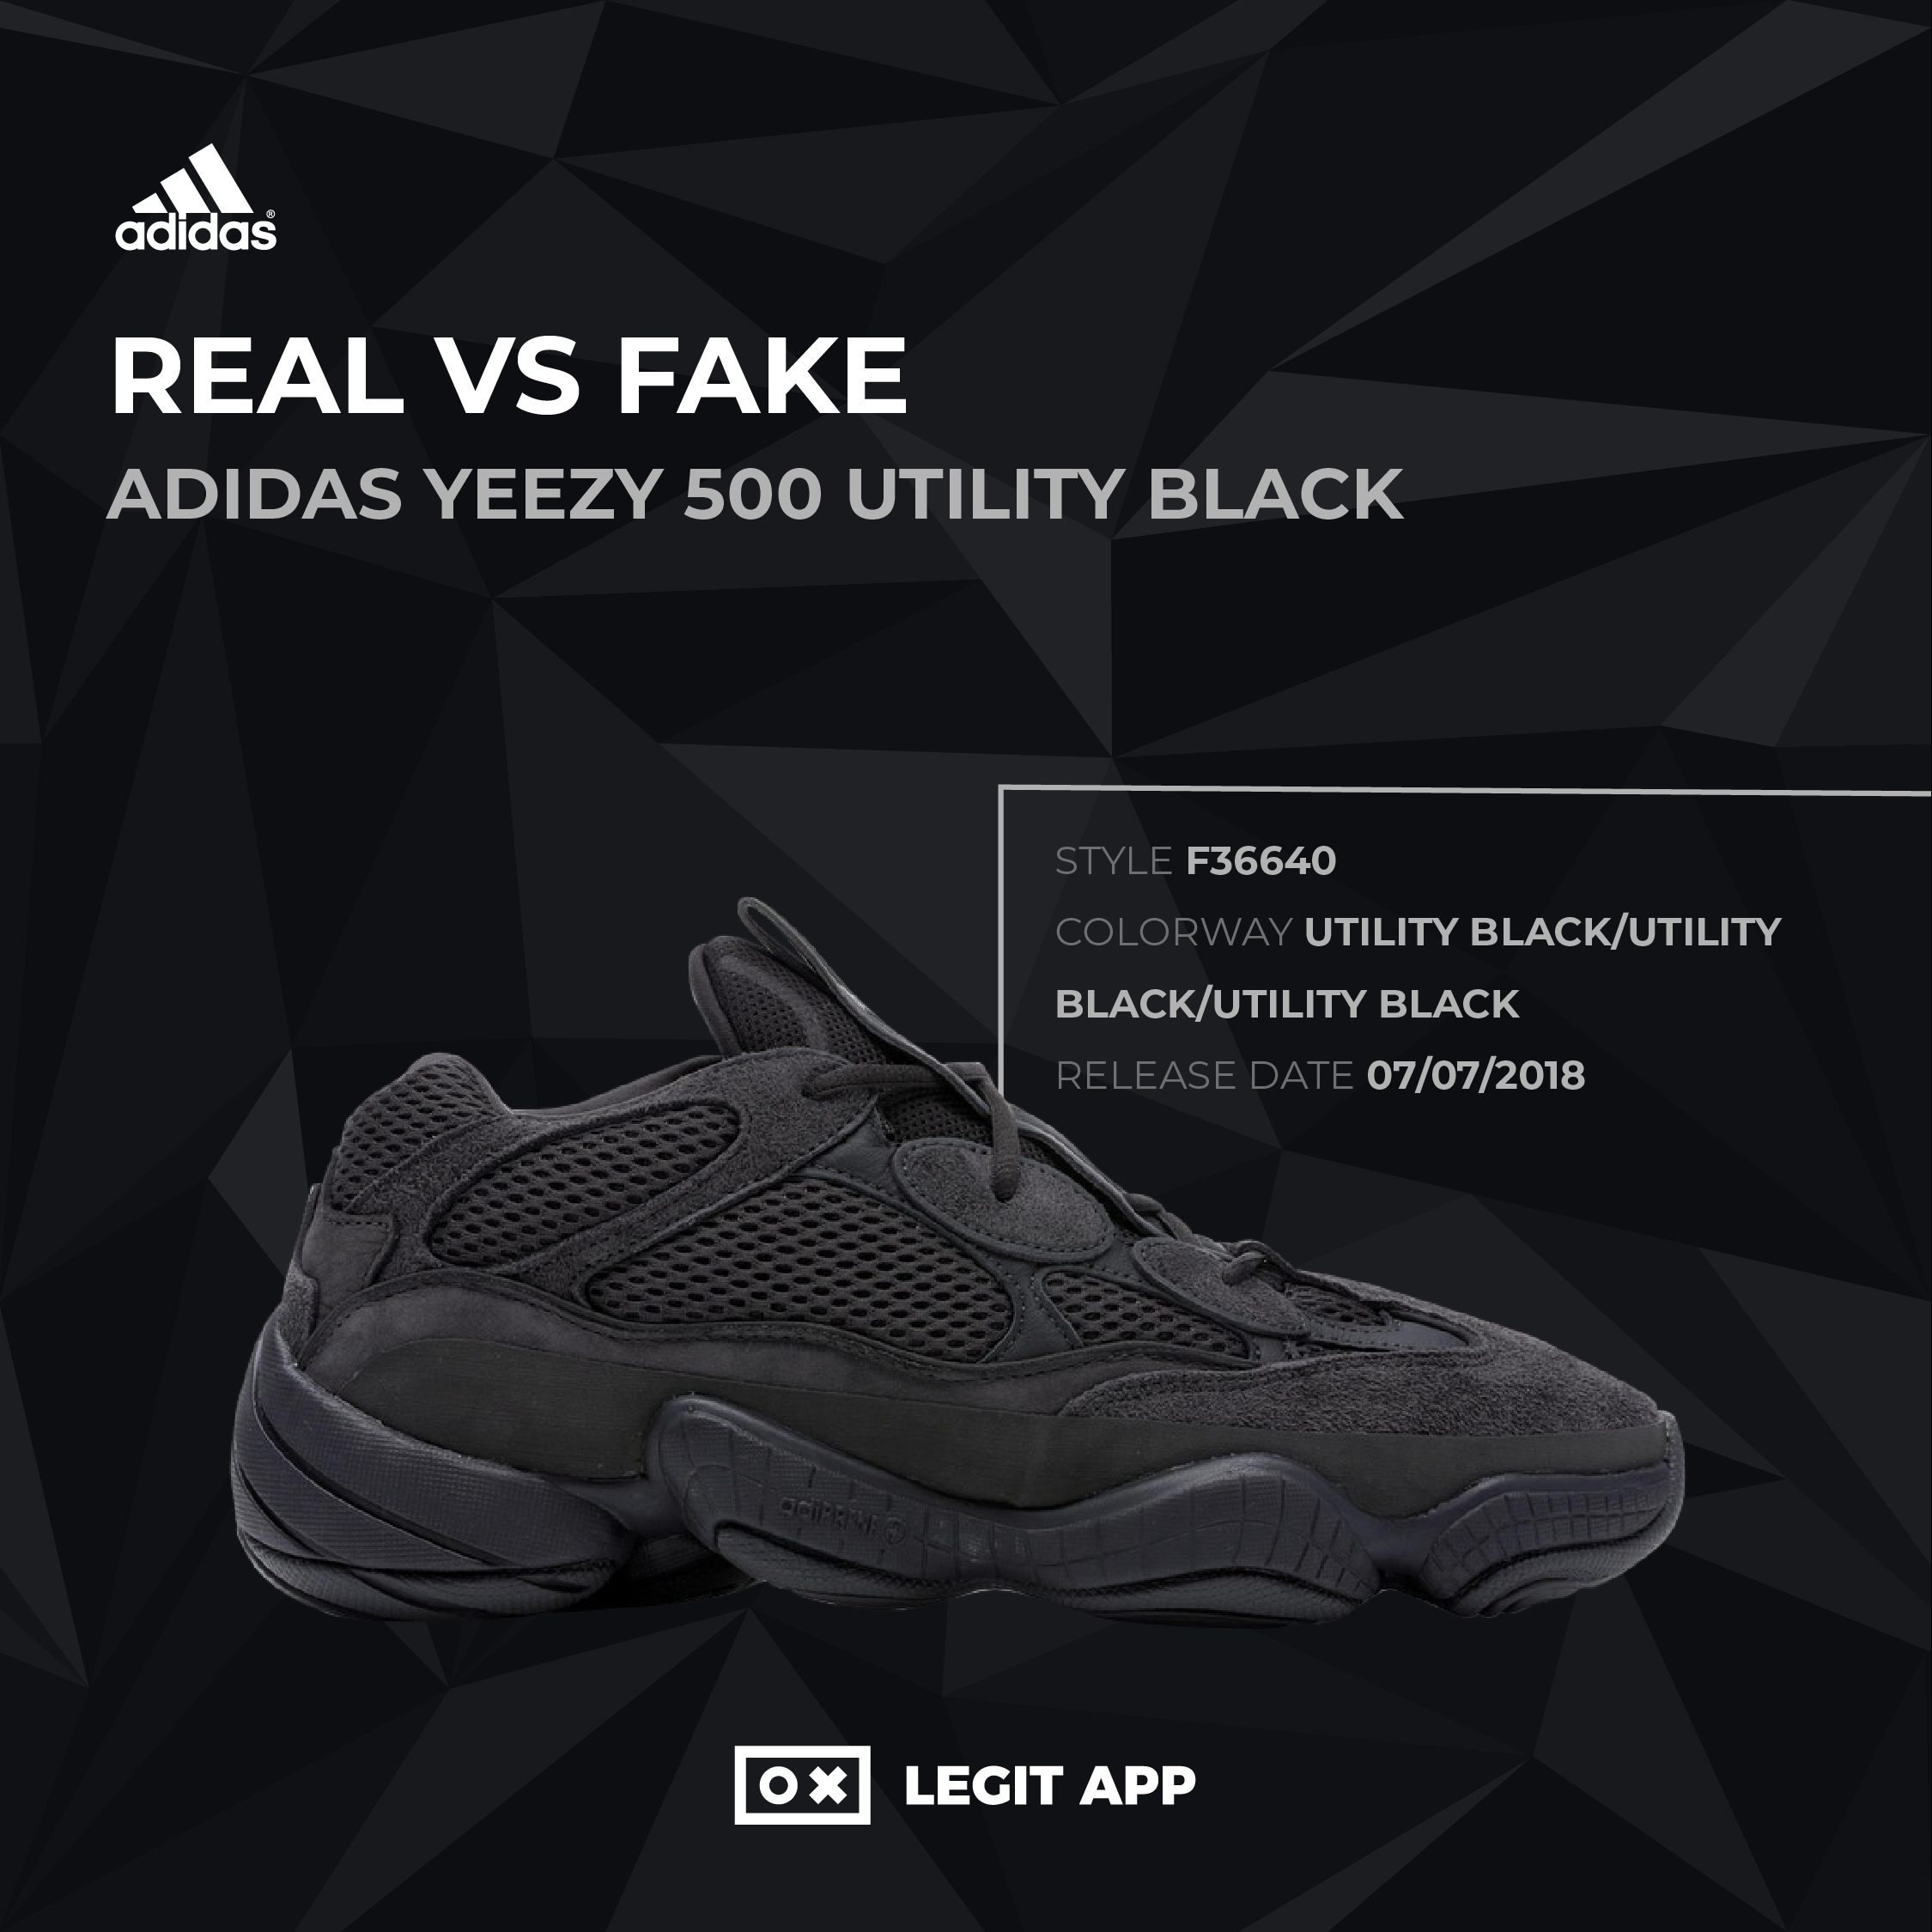 adidas yeezy 500 shoes utility black f36640